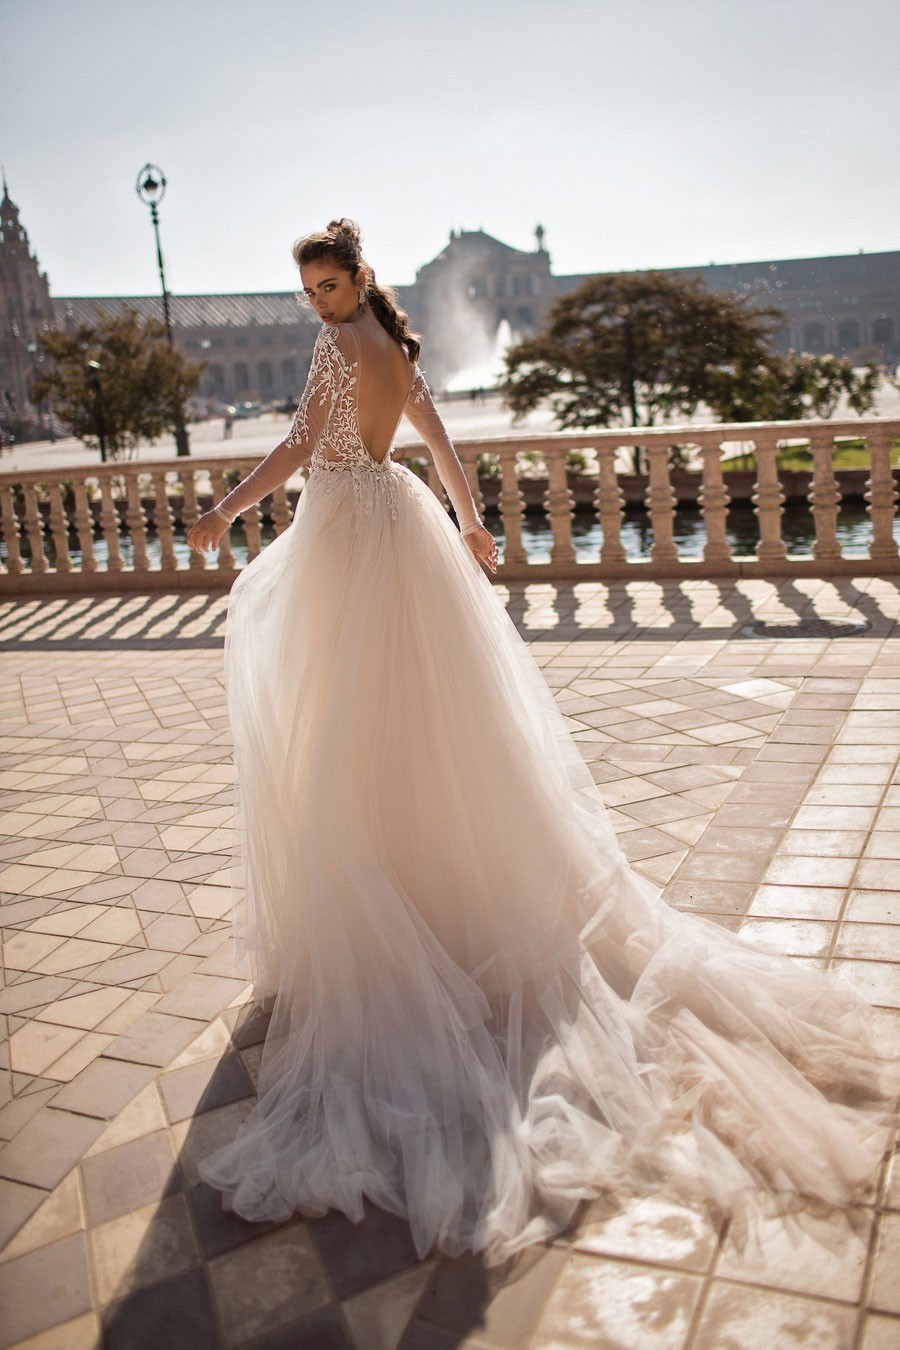 Berta Bridal Wedding Dresses: The Seville Collection!